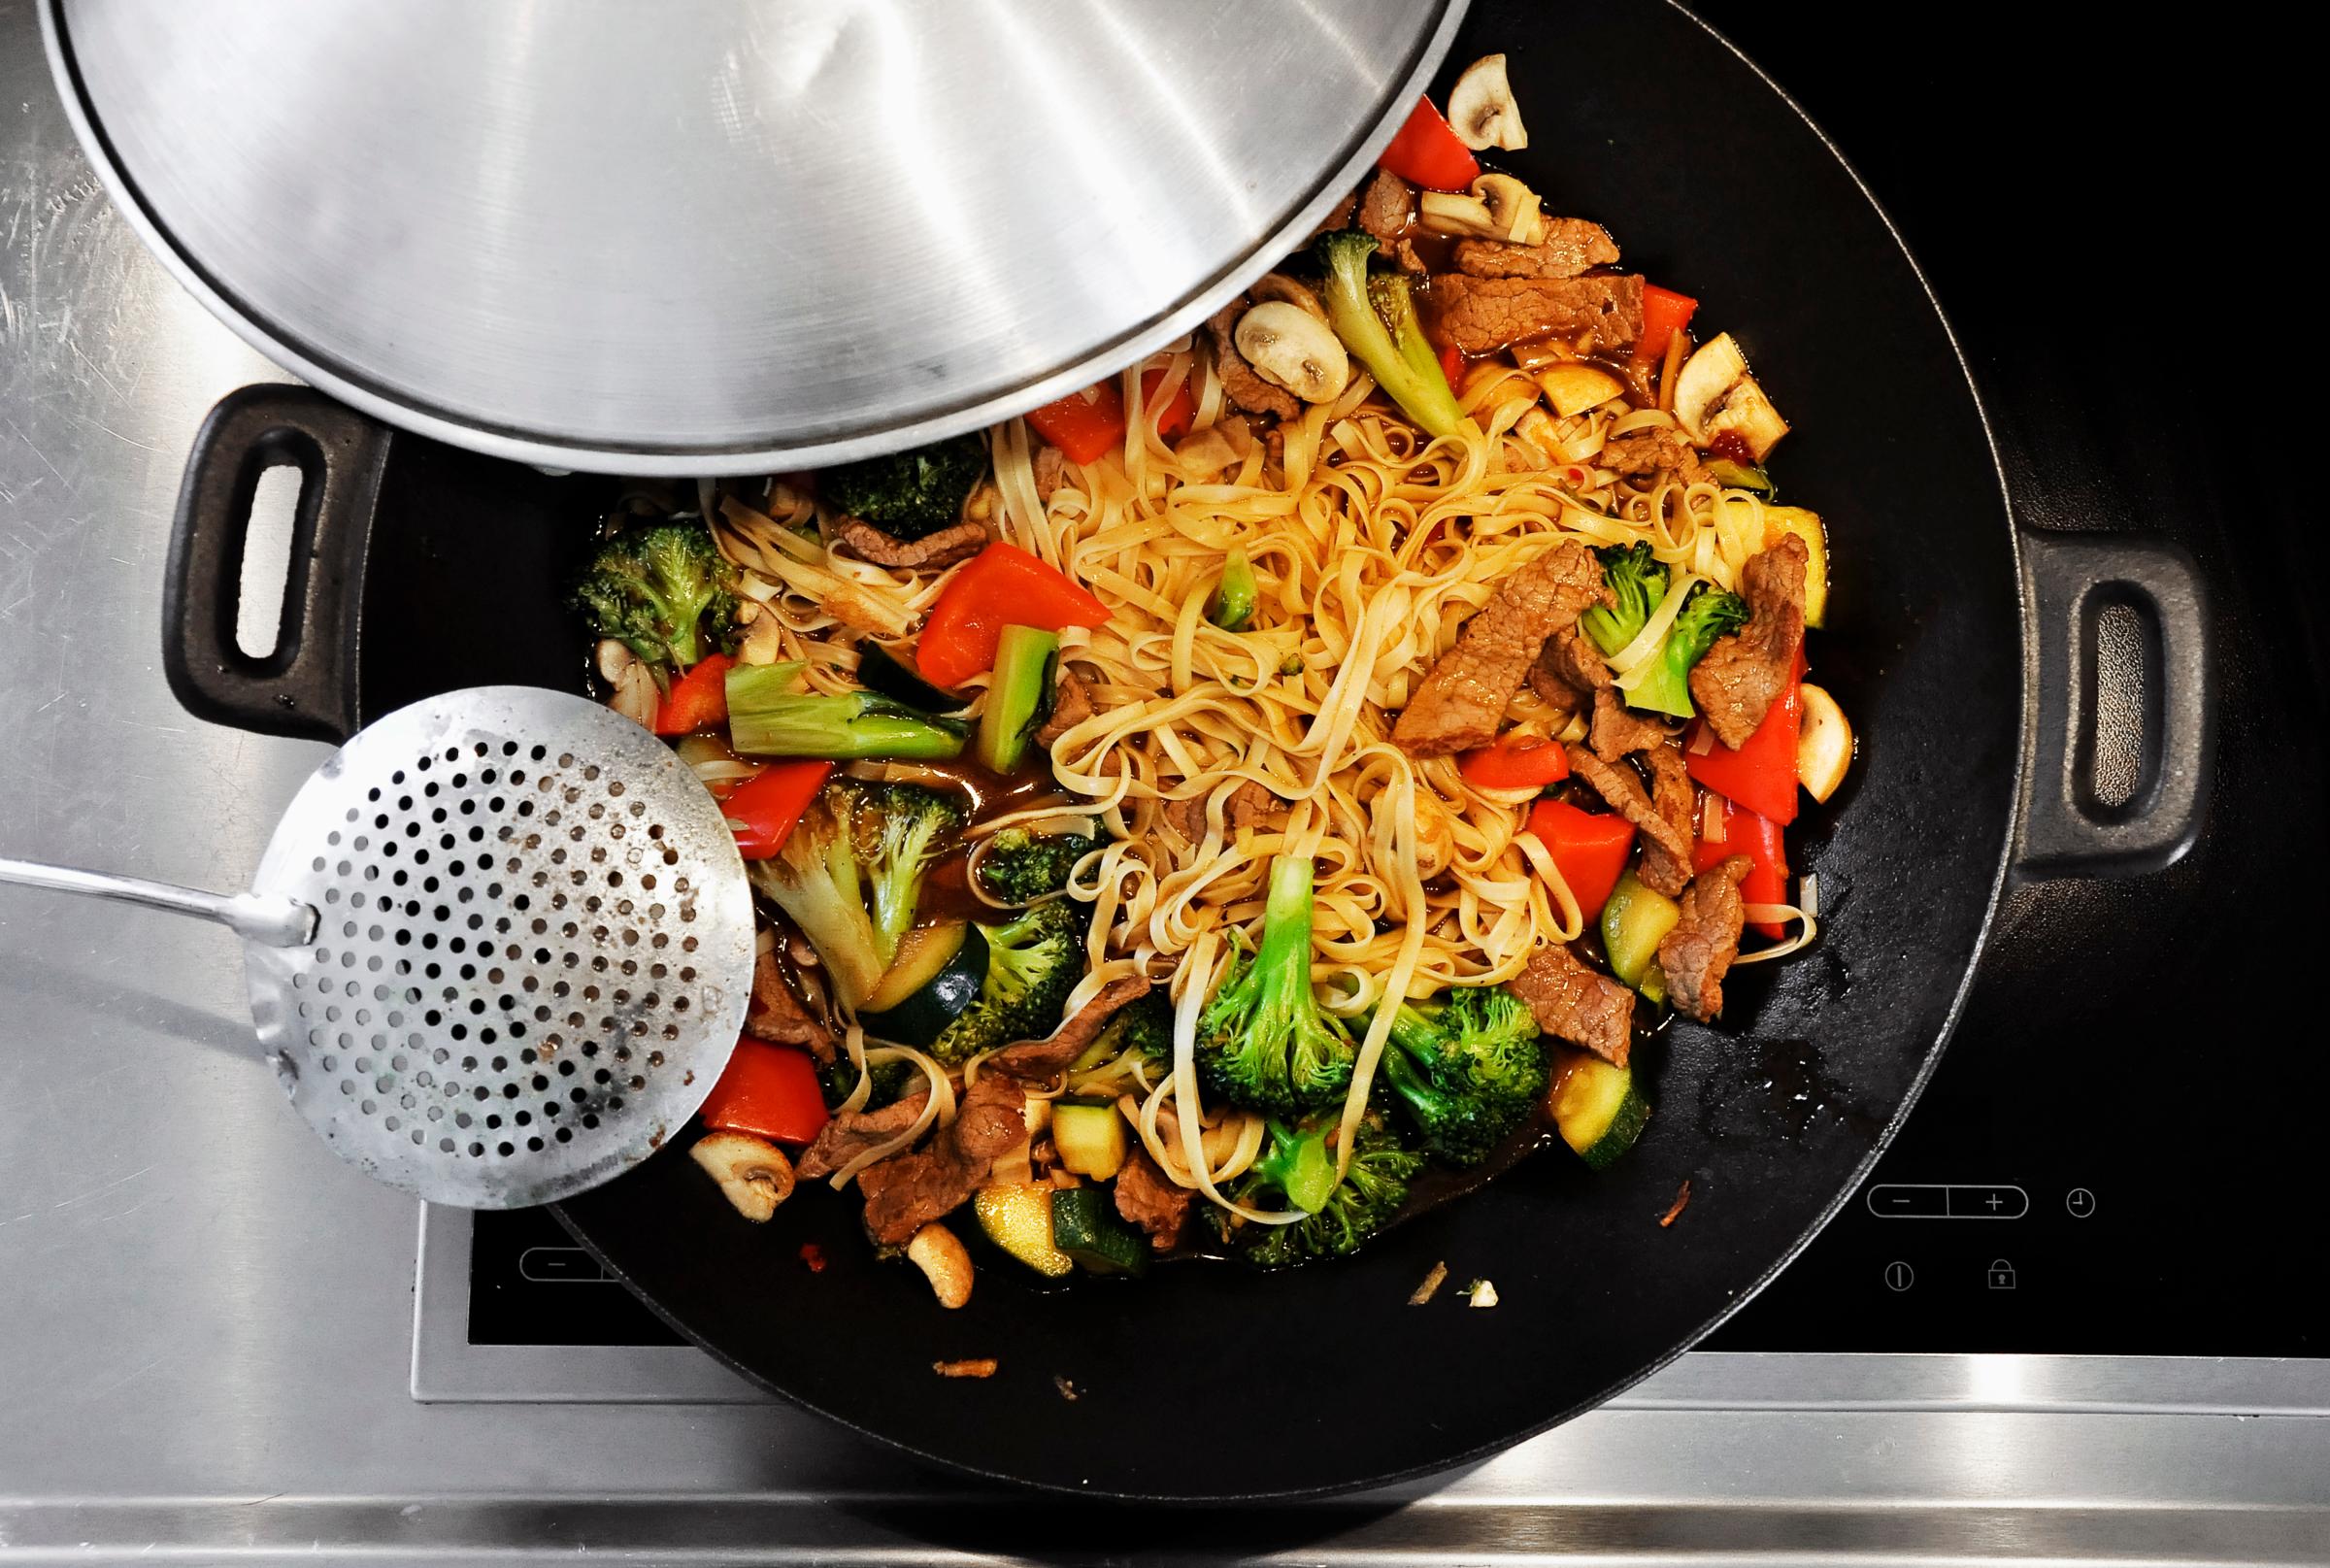 Cooking vegetable stir-fry in a wok